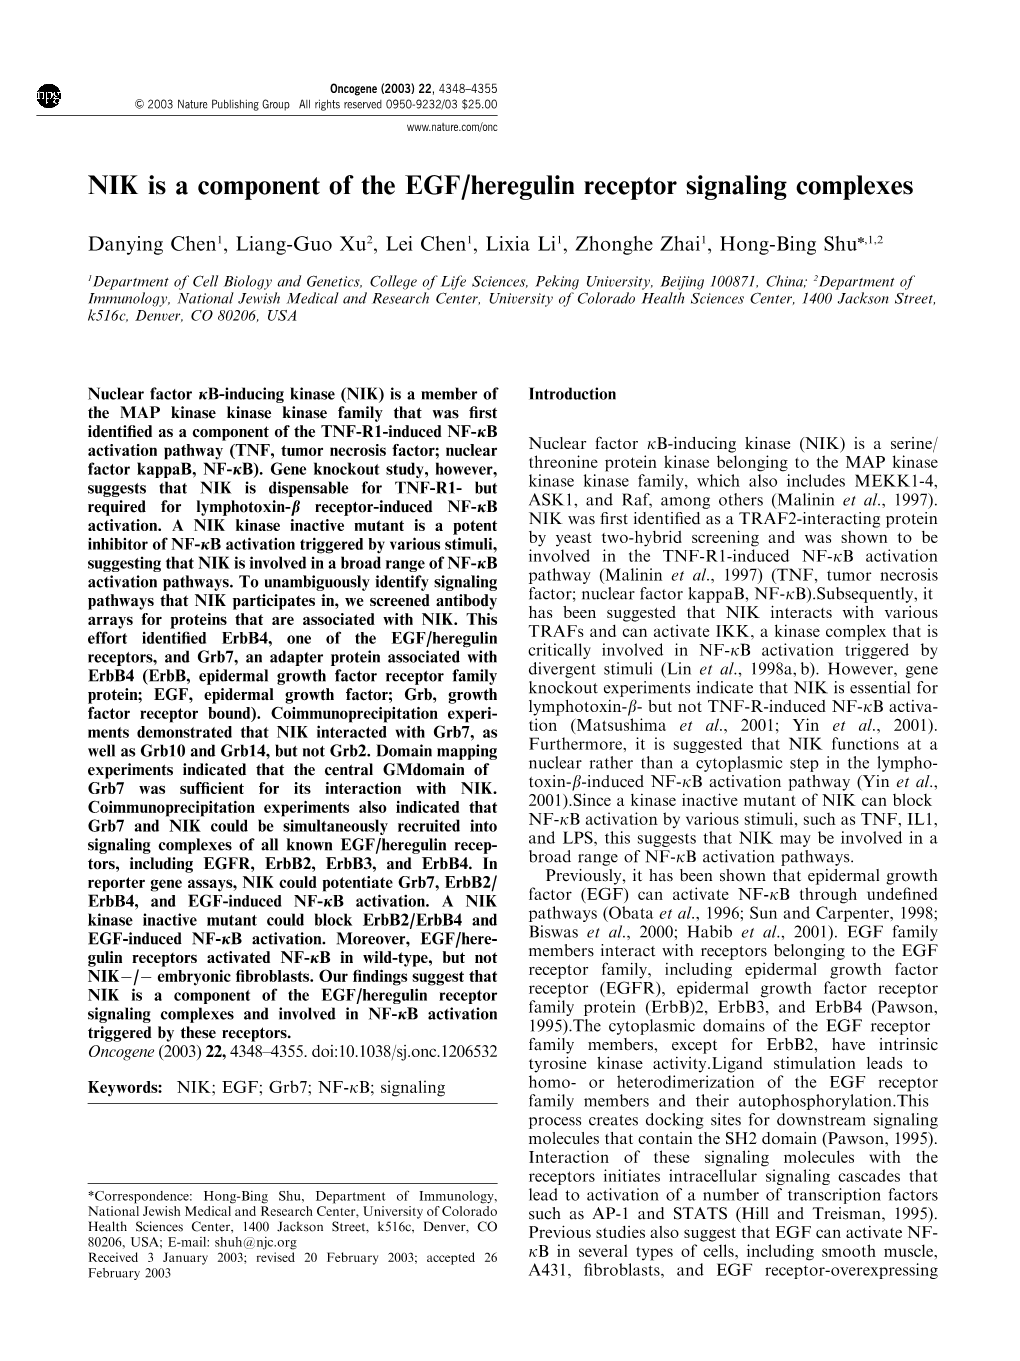 NIK Is a Component of the EGF/Heregulin Receptor Signaling Complexes